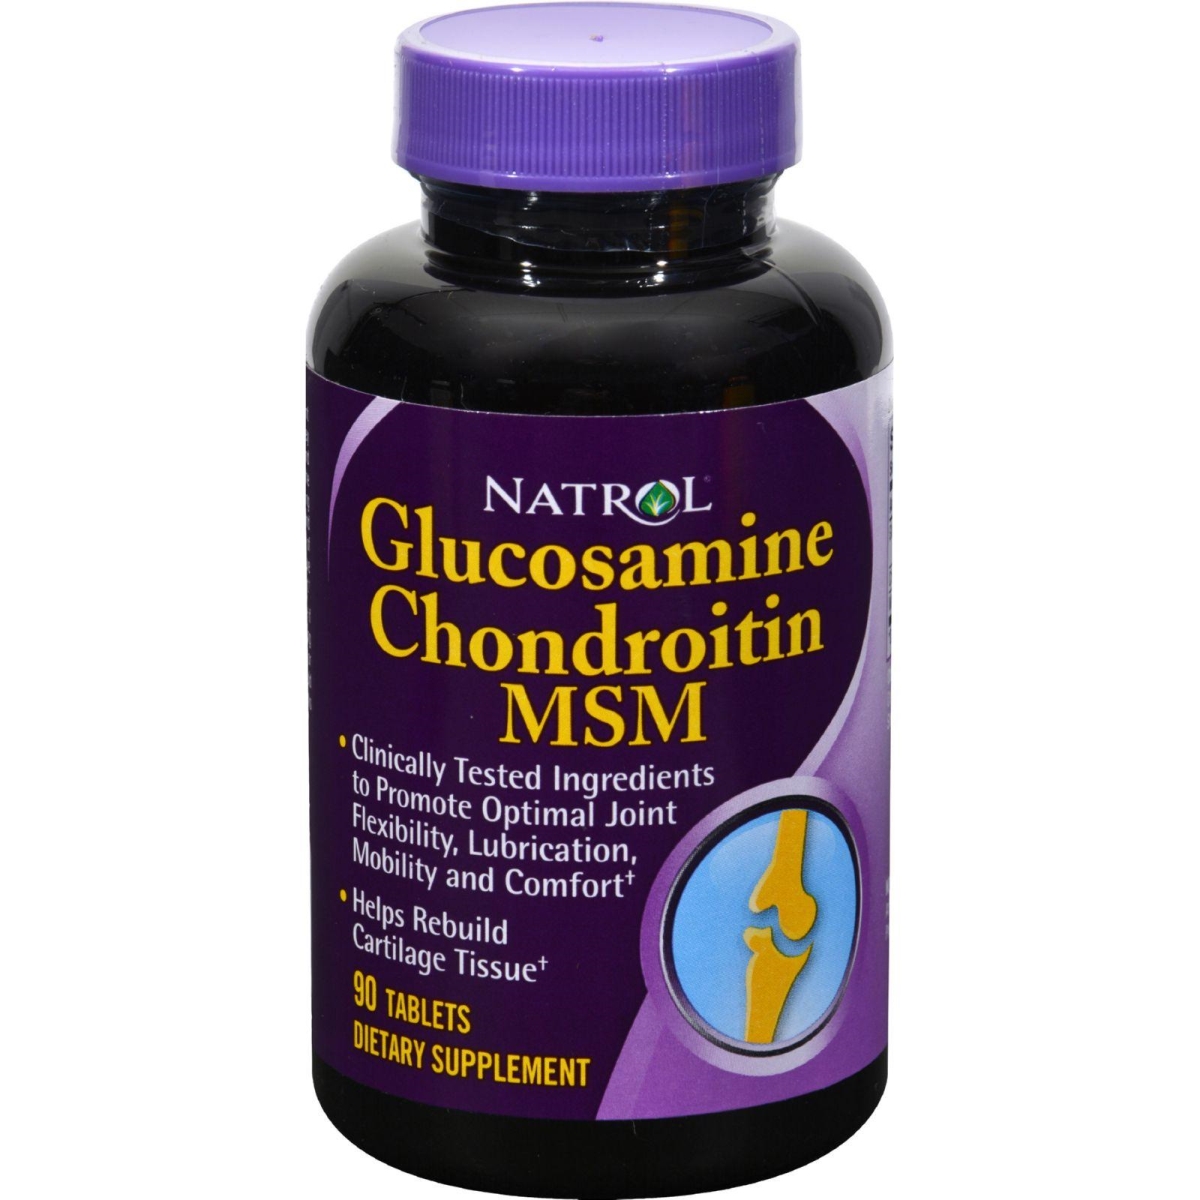 Hg0645390 Glucosamine Chondroitin & Msm - 90 Tablets